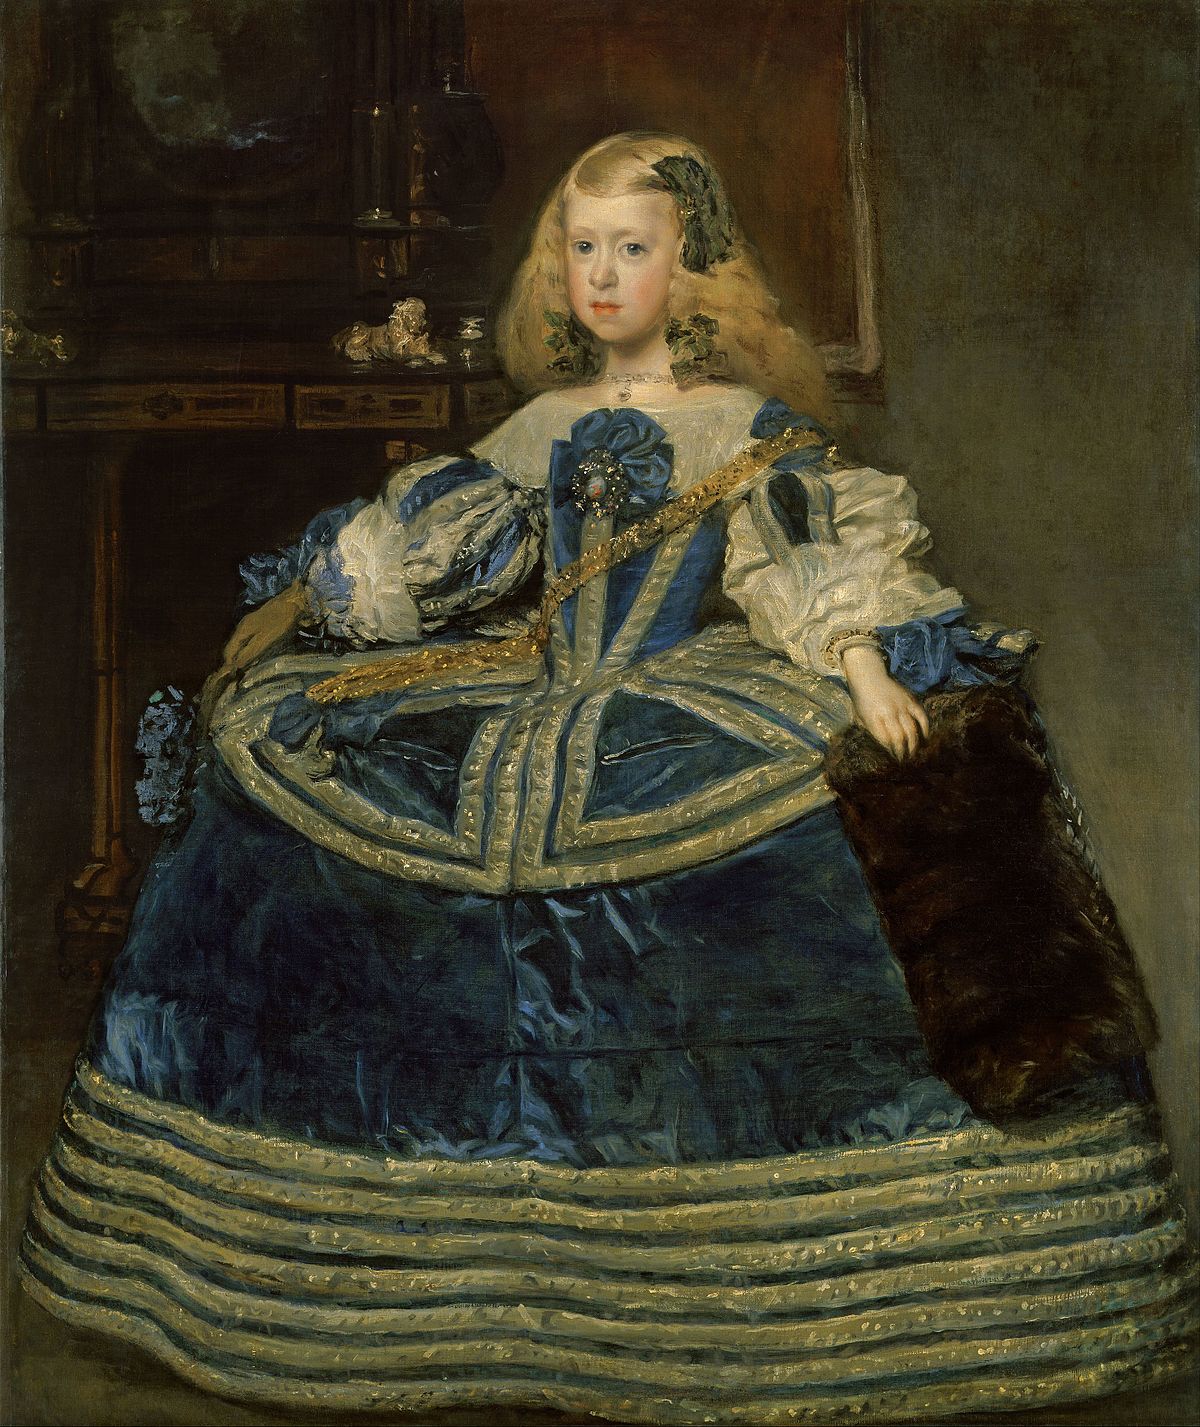 Diego_Rodriguez_de_Silva_y_Velázquez_-_Infanta_Margarita_Teresa_in_a_Blue_Dress_-_Google_Art_Project 1659 wiki.jpg